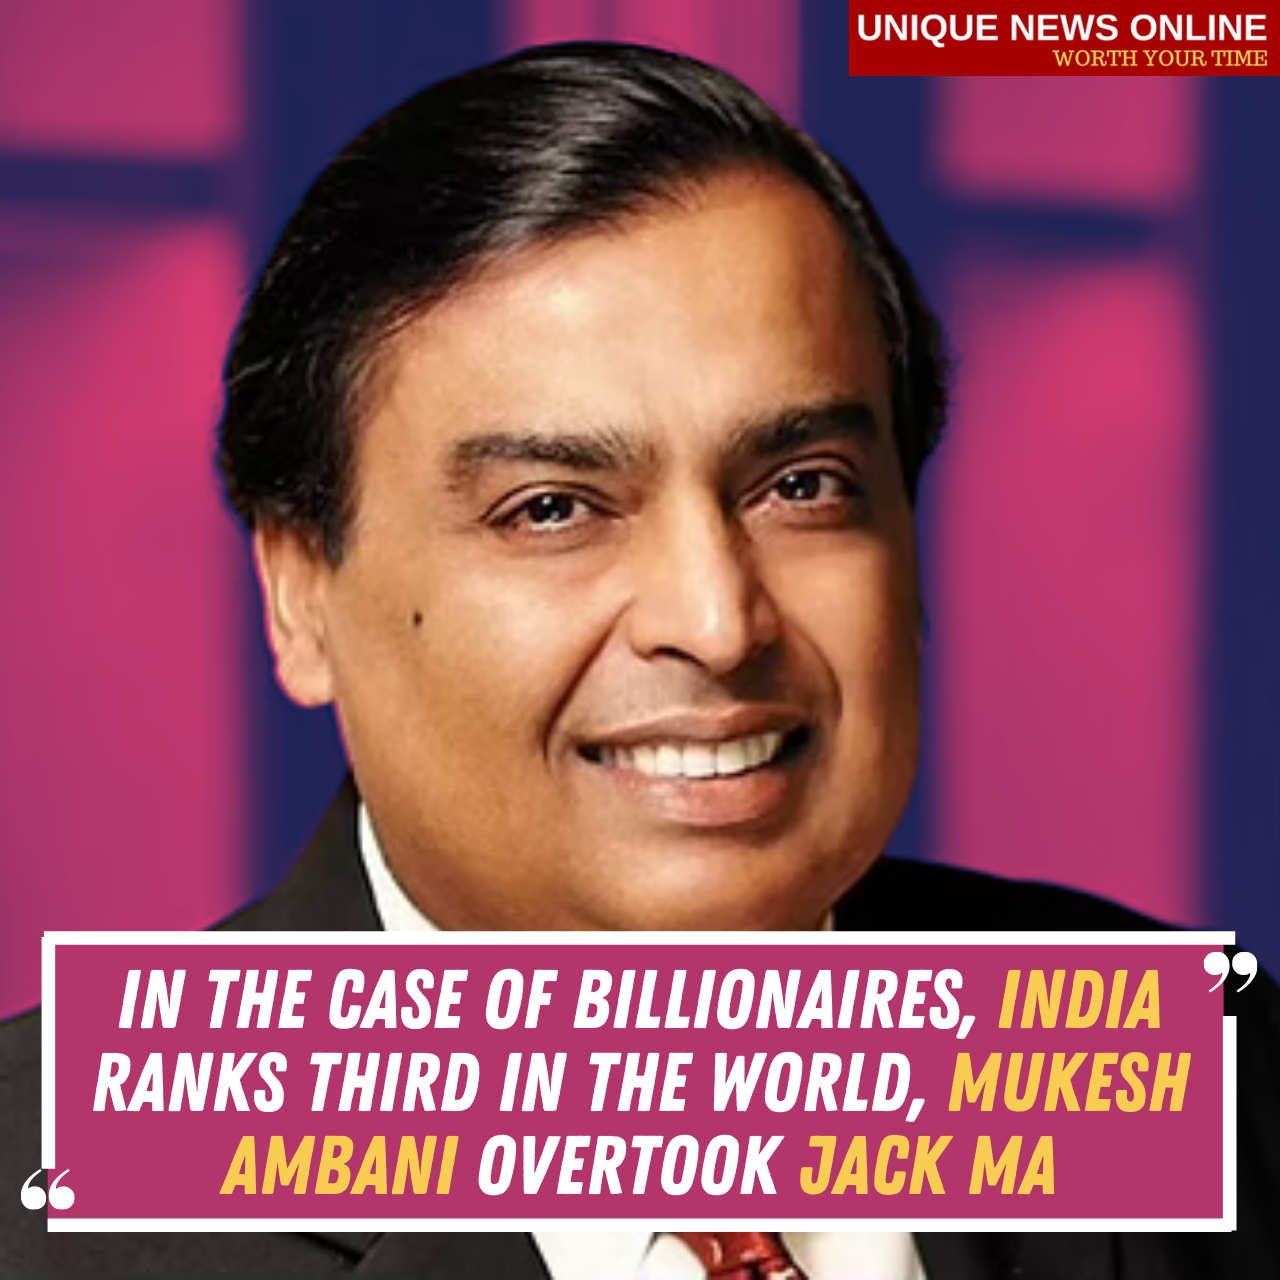 In the case of billionaires, India ranks third in the world, Mukesh Ambani overtook Jack Ma